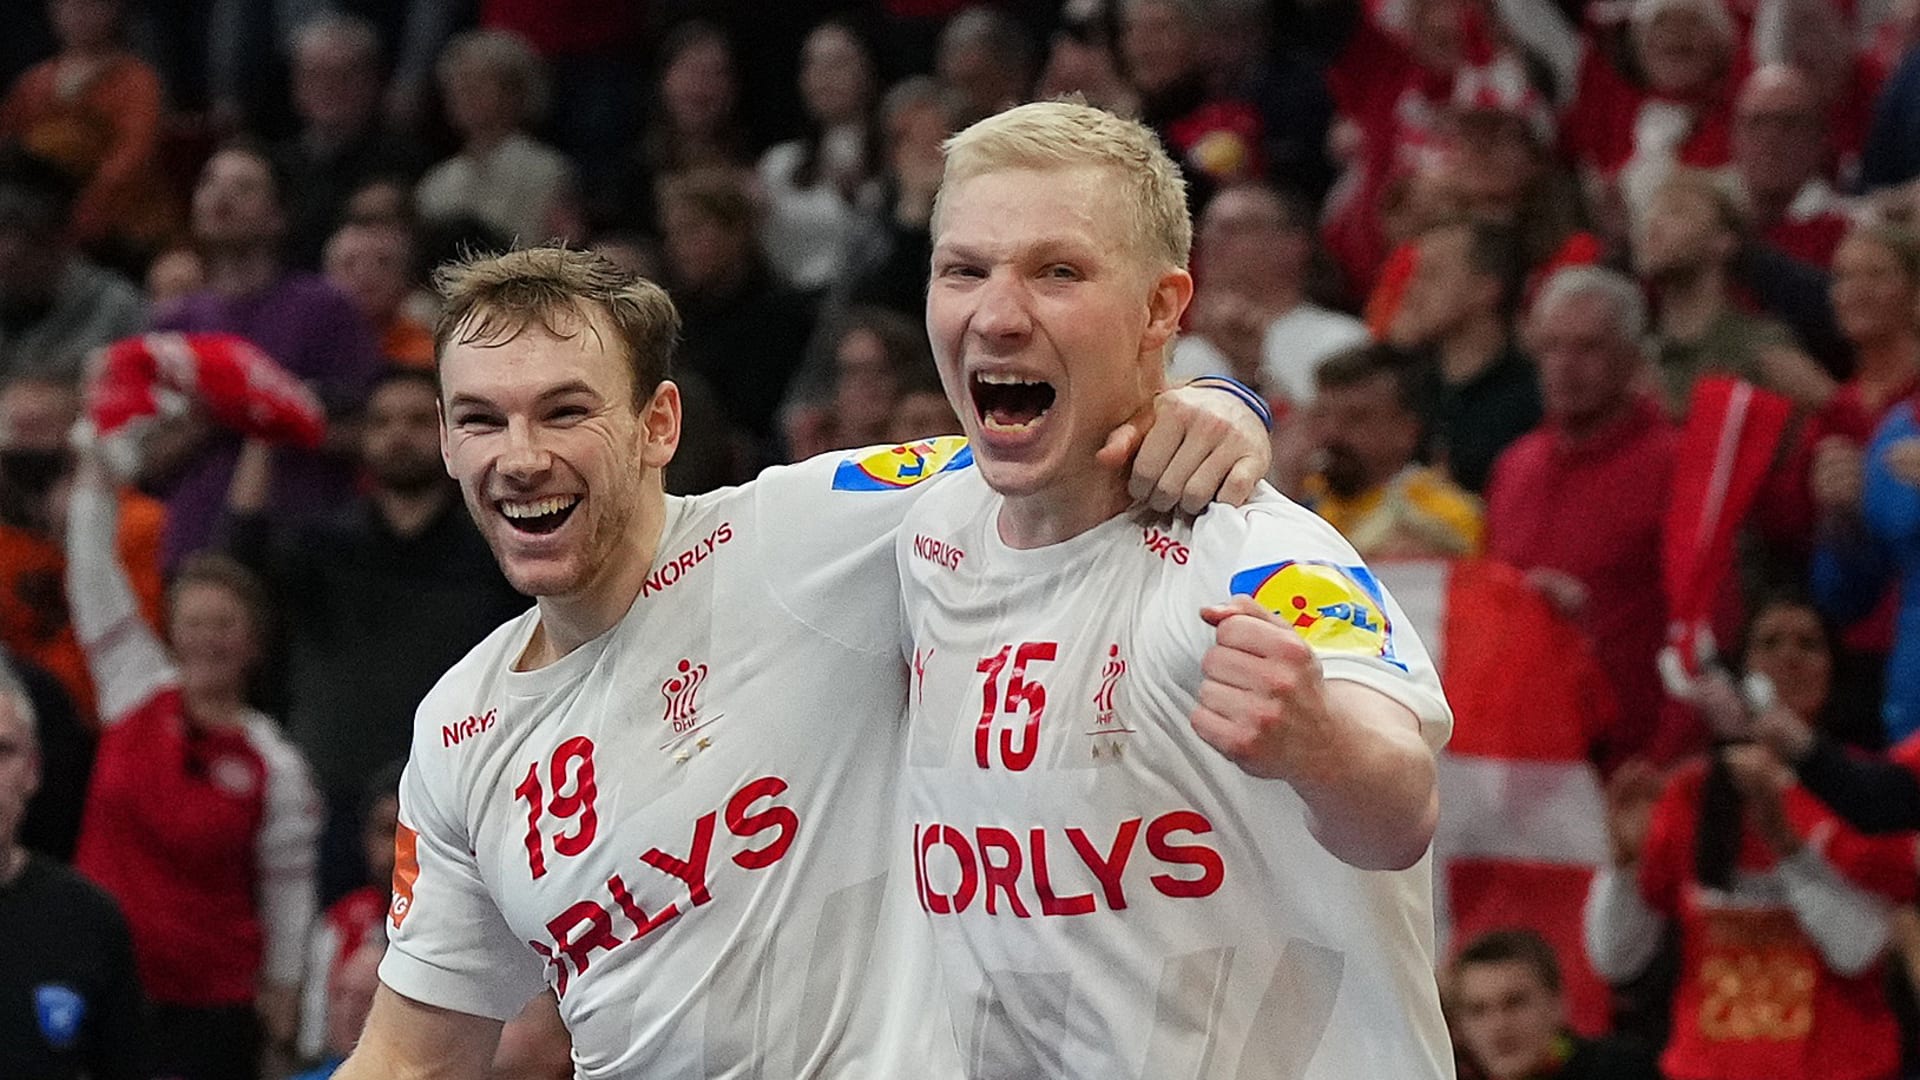 Team Denmark World Champion during the IHF Men's World Championship 2023,  Final Handball match between France